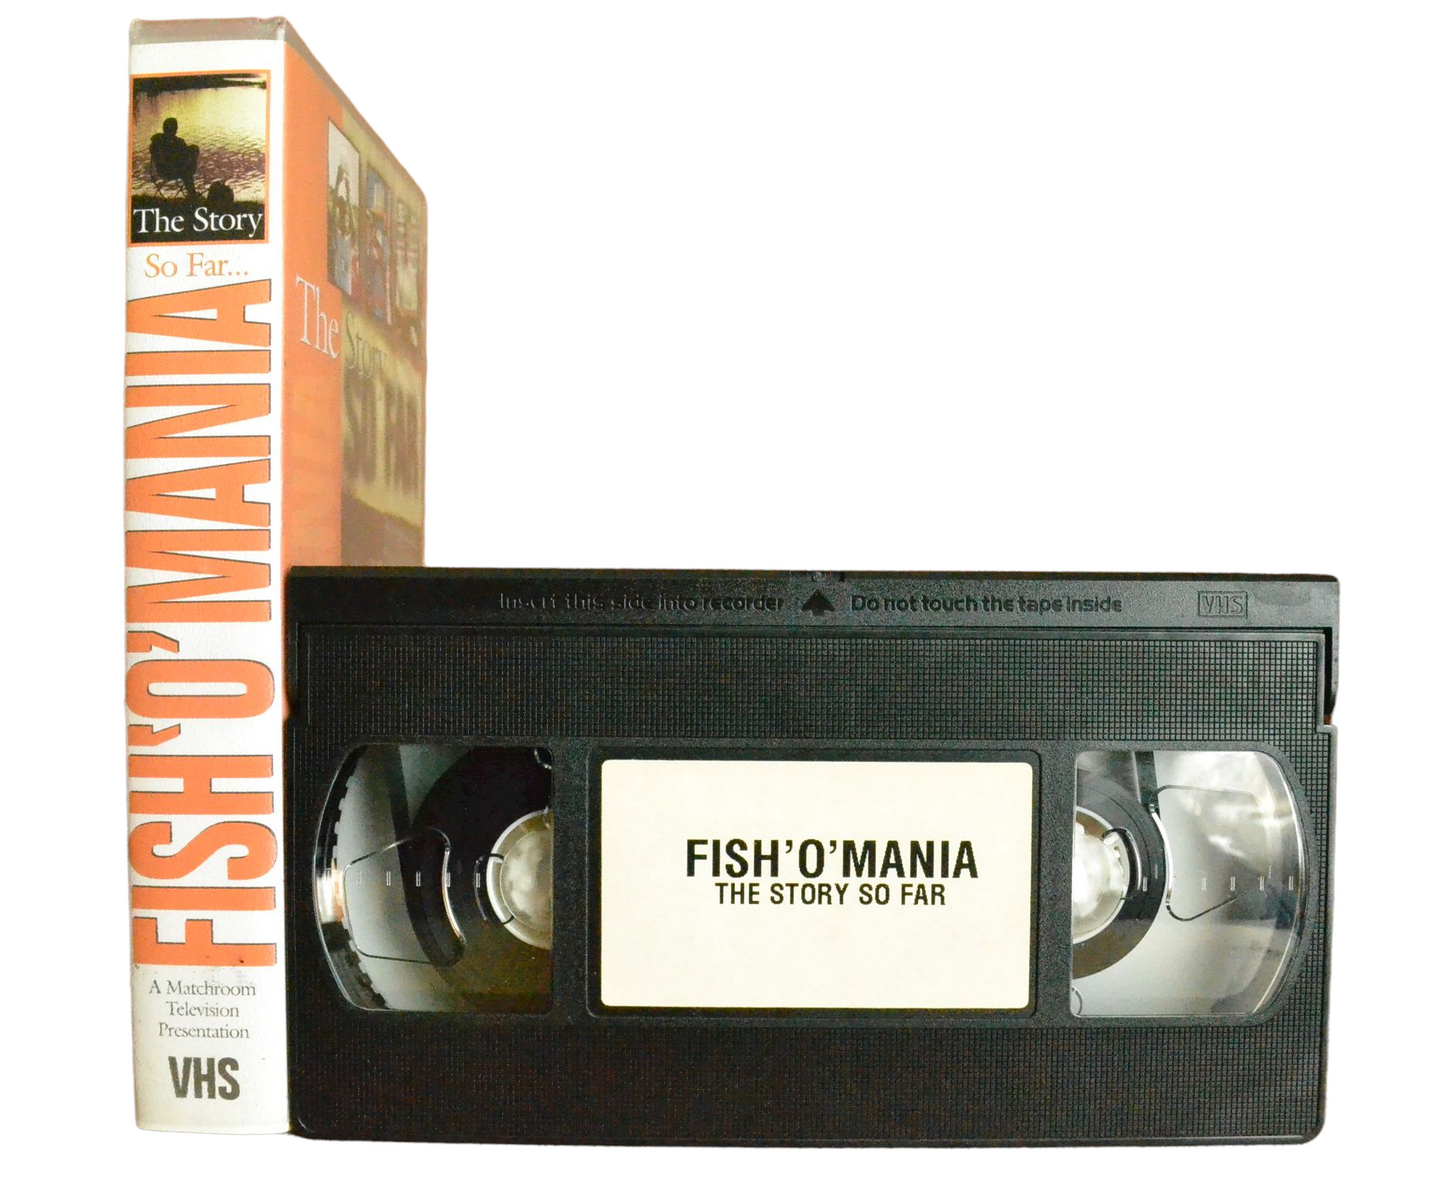 Fish 'O' Mania: The Story So Far - A Matchroom Television Presentation - Pal VHS-